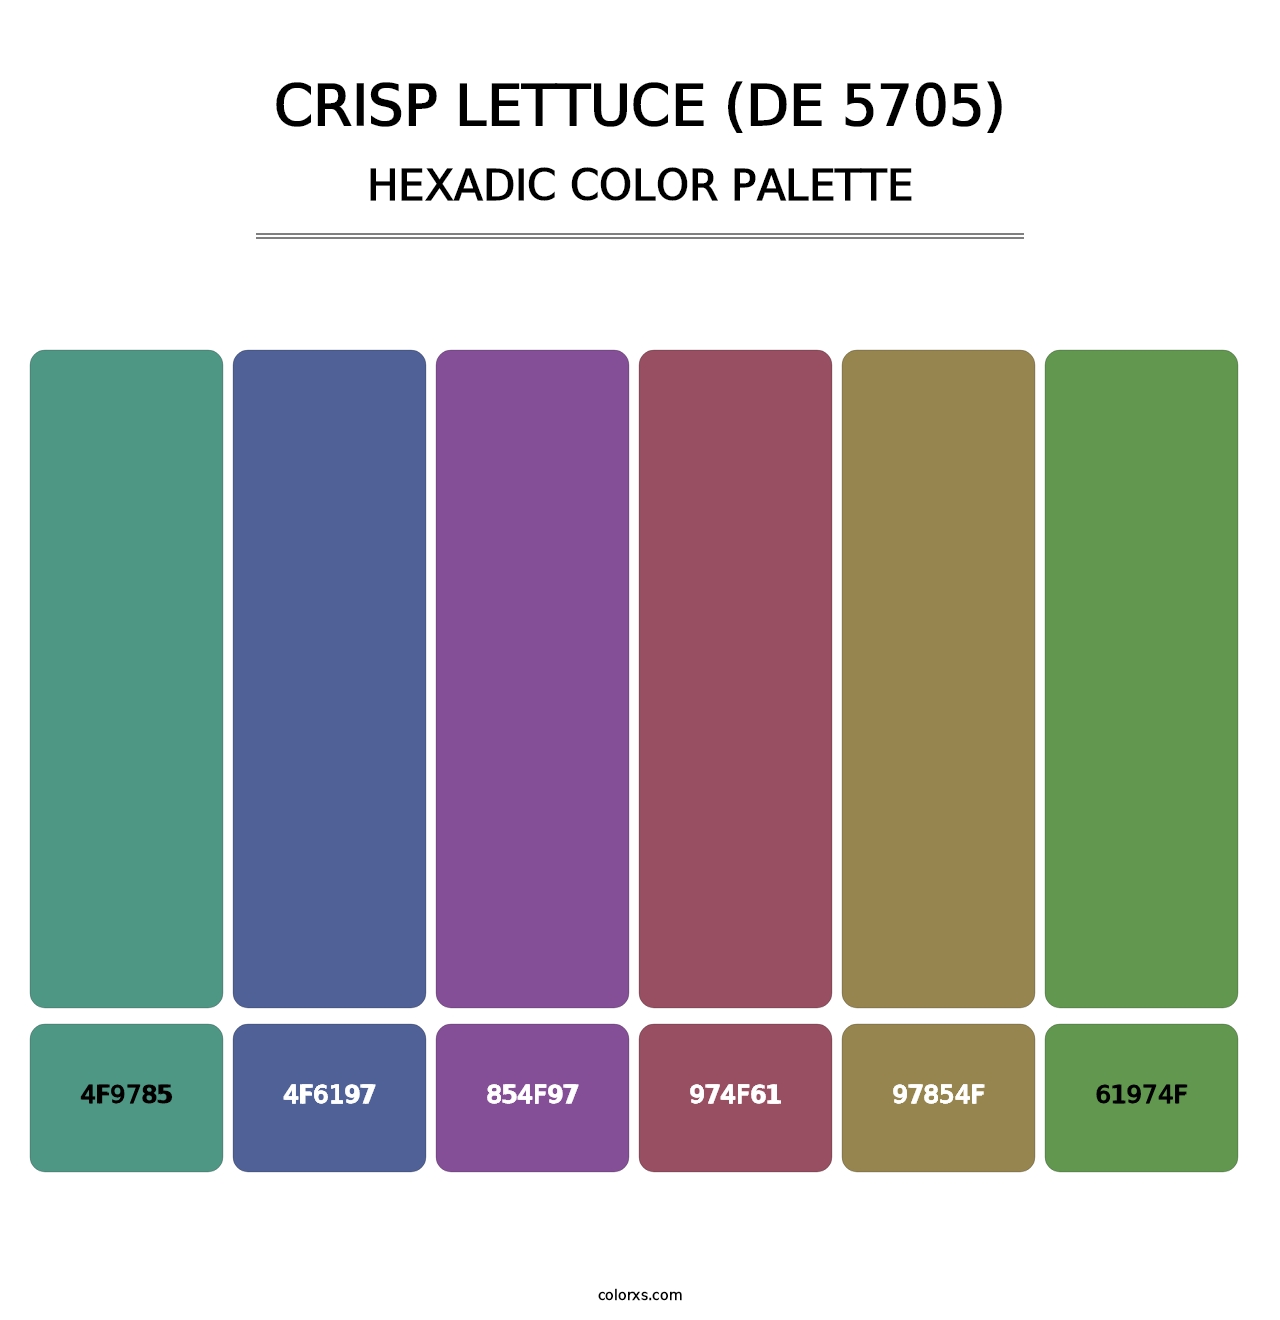 Crisp Lettuce (DE 5705) - Hexadic Color Palette